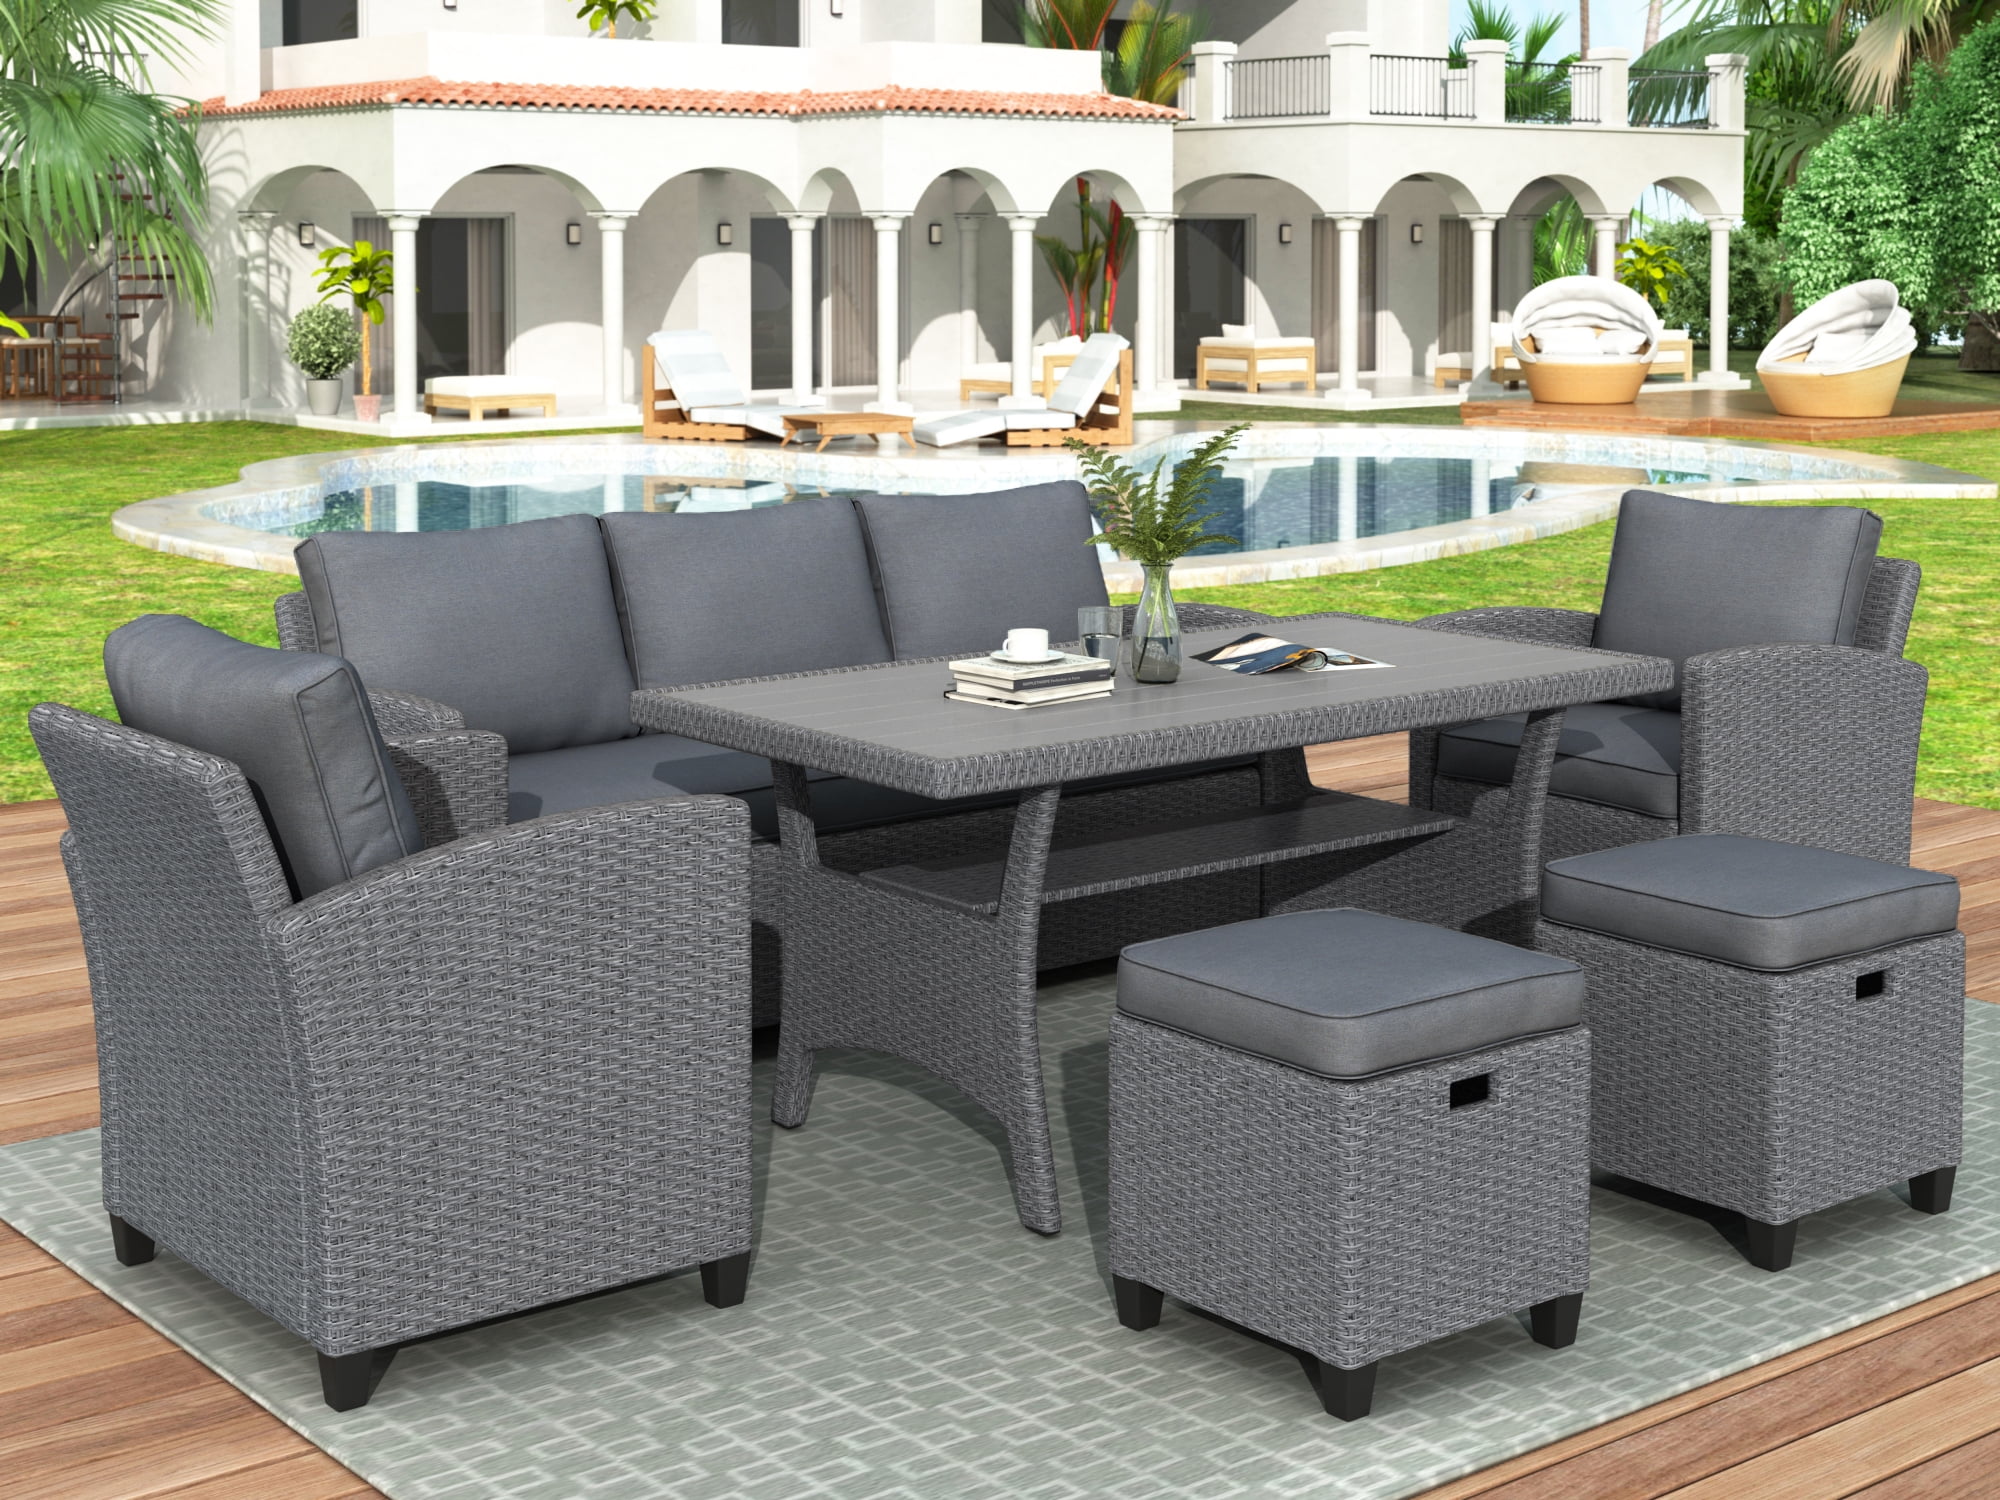 URHOMEPRO Outdoor Sectional Sofa Sets, 6 Piece Patio Wicker Patio